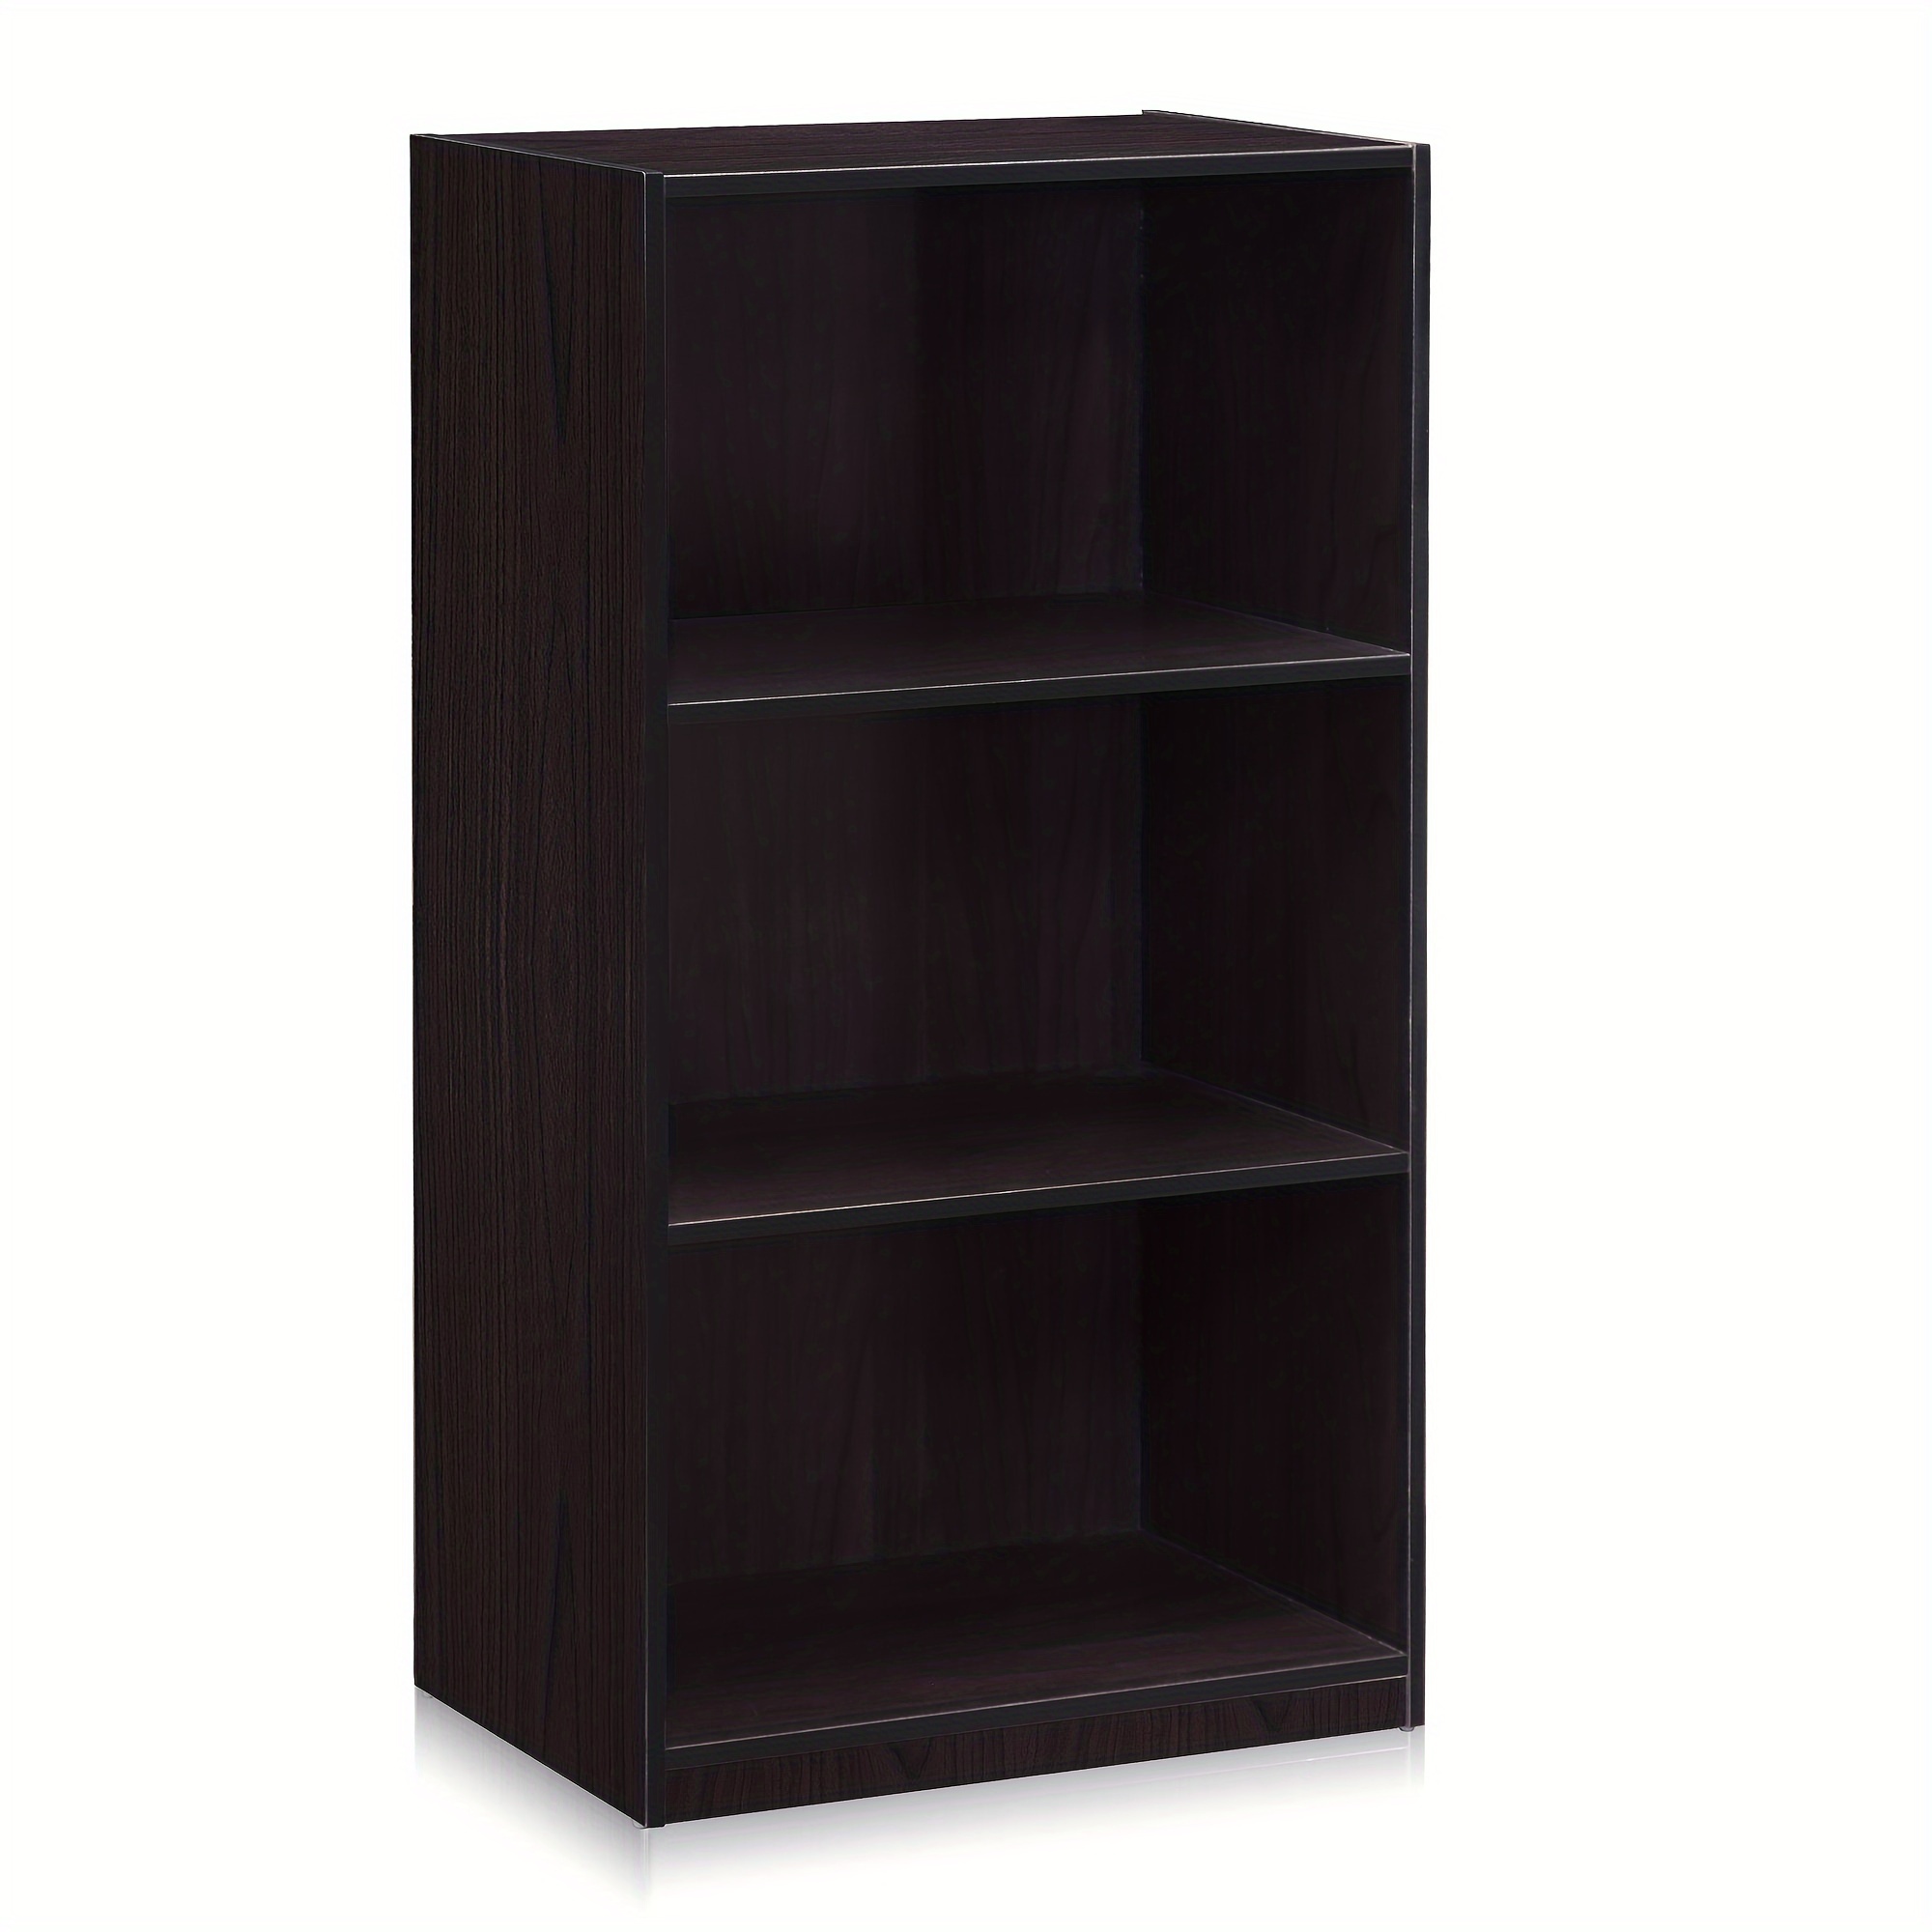 

Furinno Basic 3-tier Bookcase Storage Shelves Dark Walnut Compact Bookshelf Organizer For Home Office Living Room Bedroom